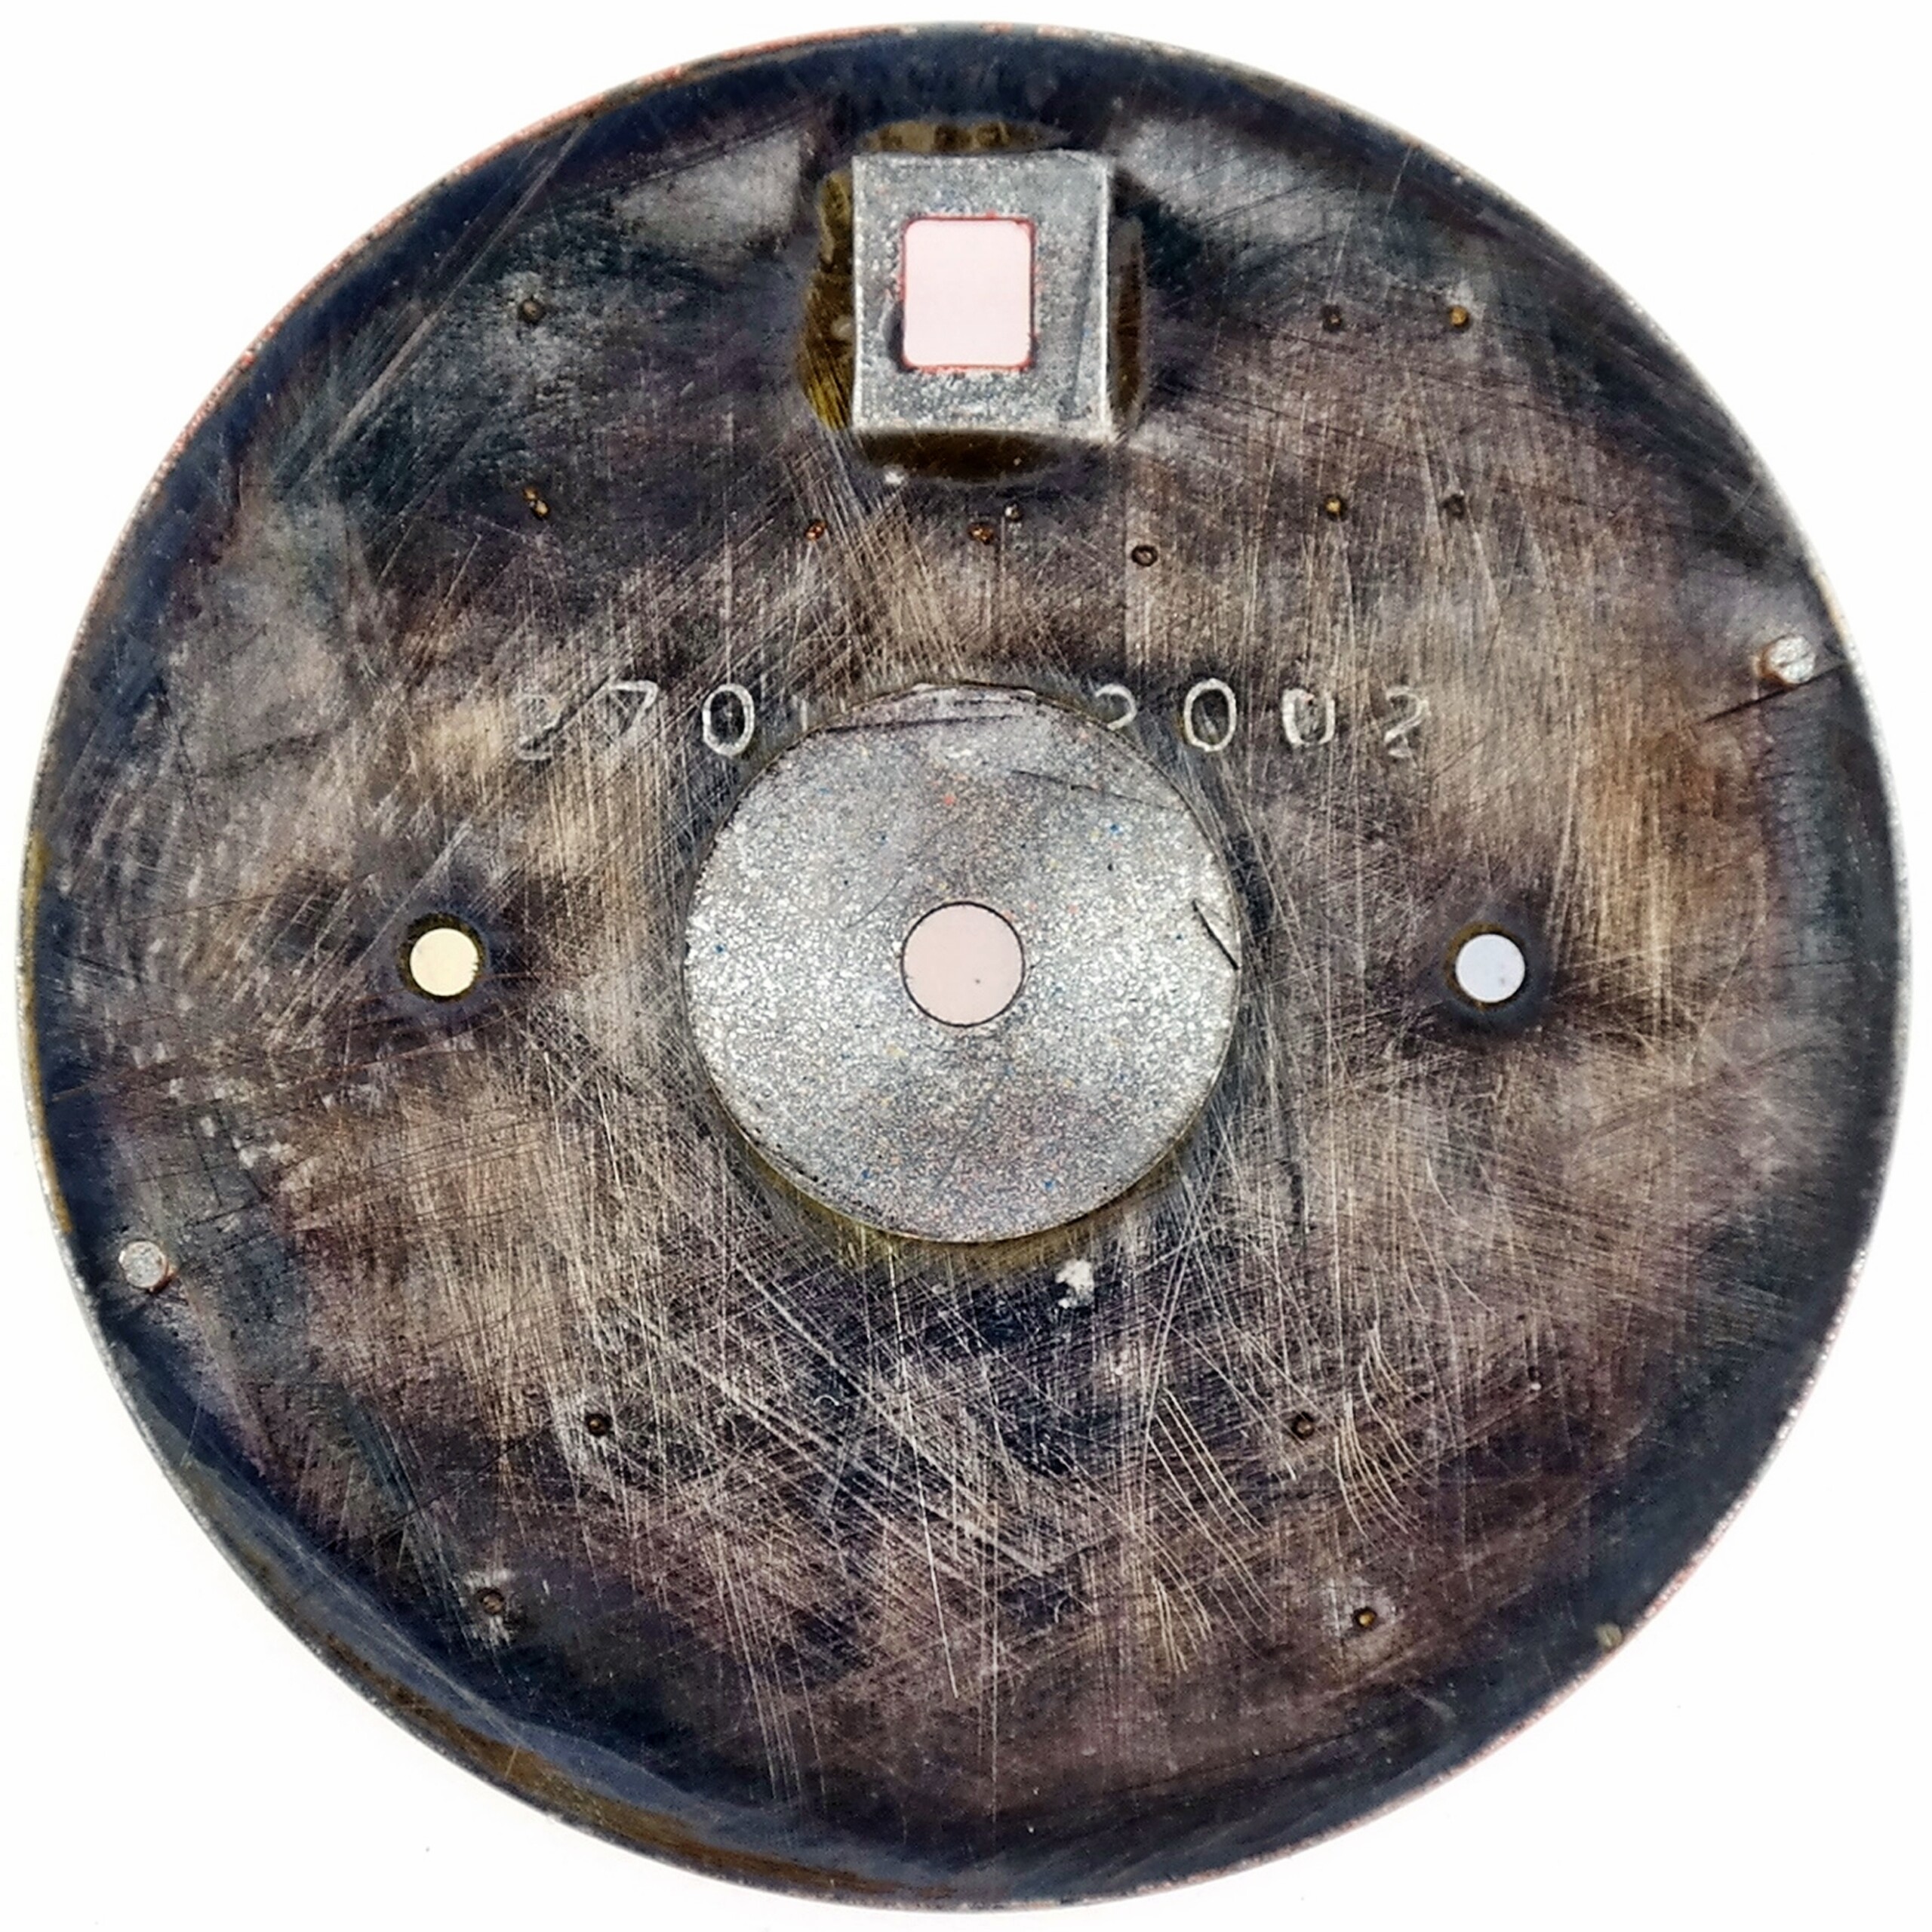 JORG HYSEK - Anegada Chronograph - Watch Dial - Limited Edition